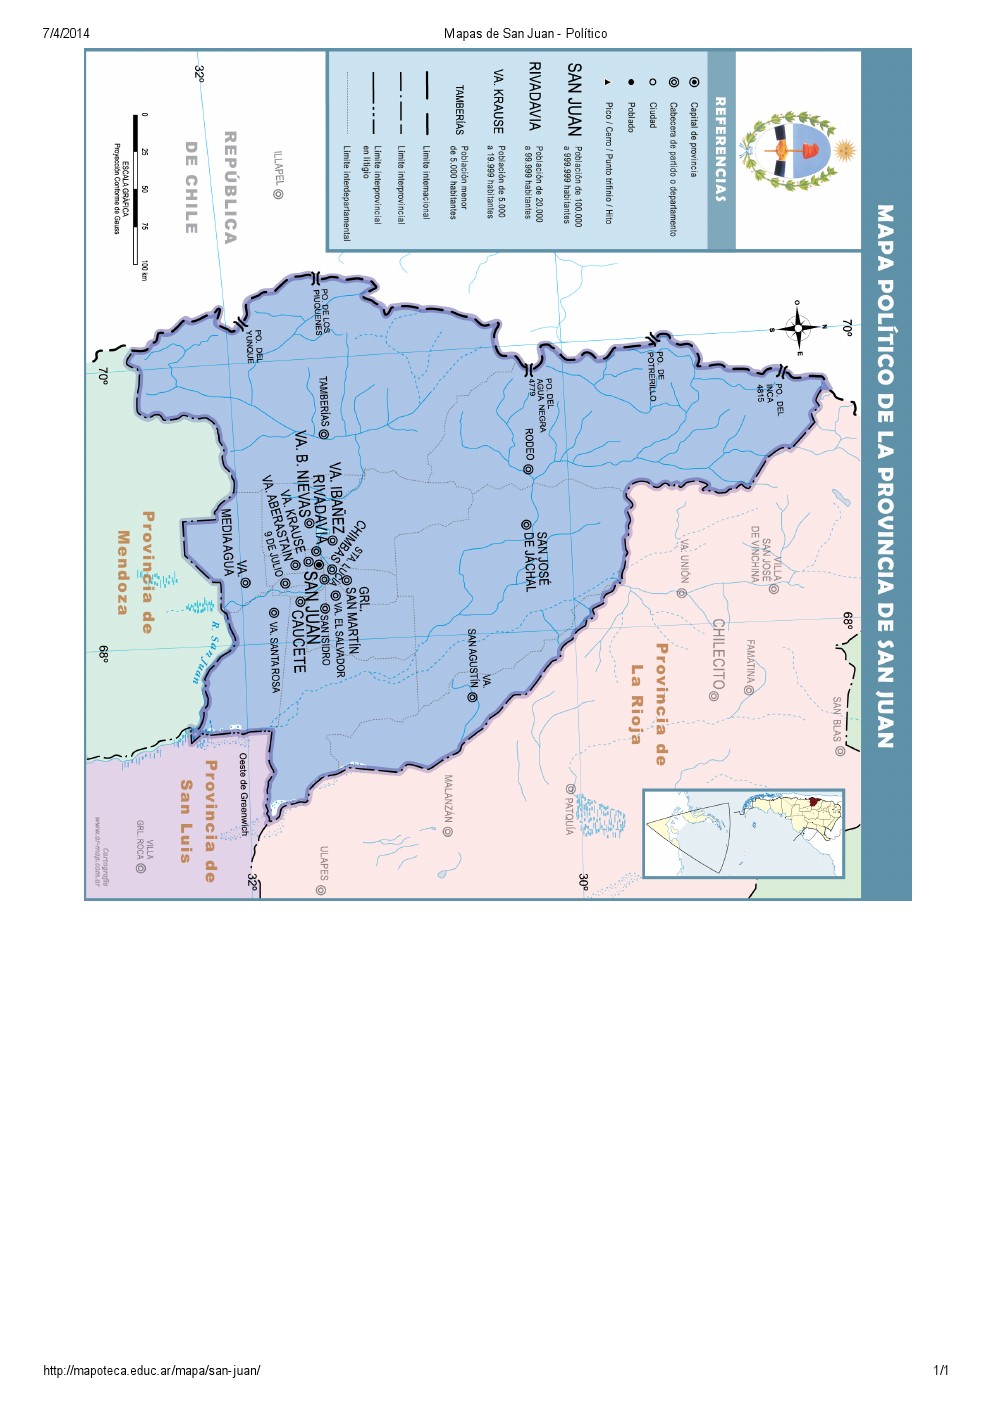 Mapa de capitales de San Juan. Mapoteca de Educ.ar